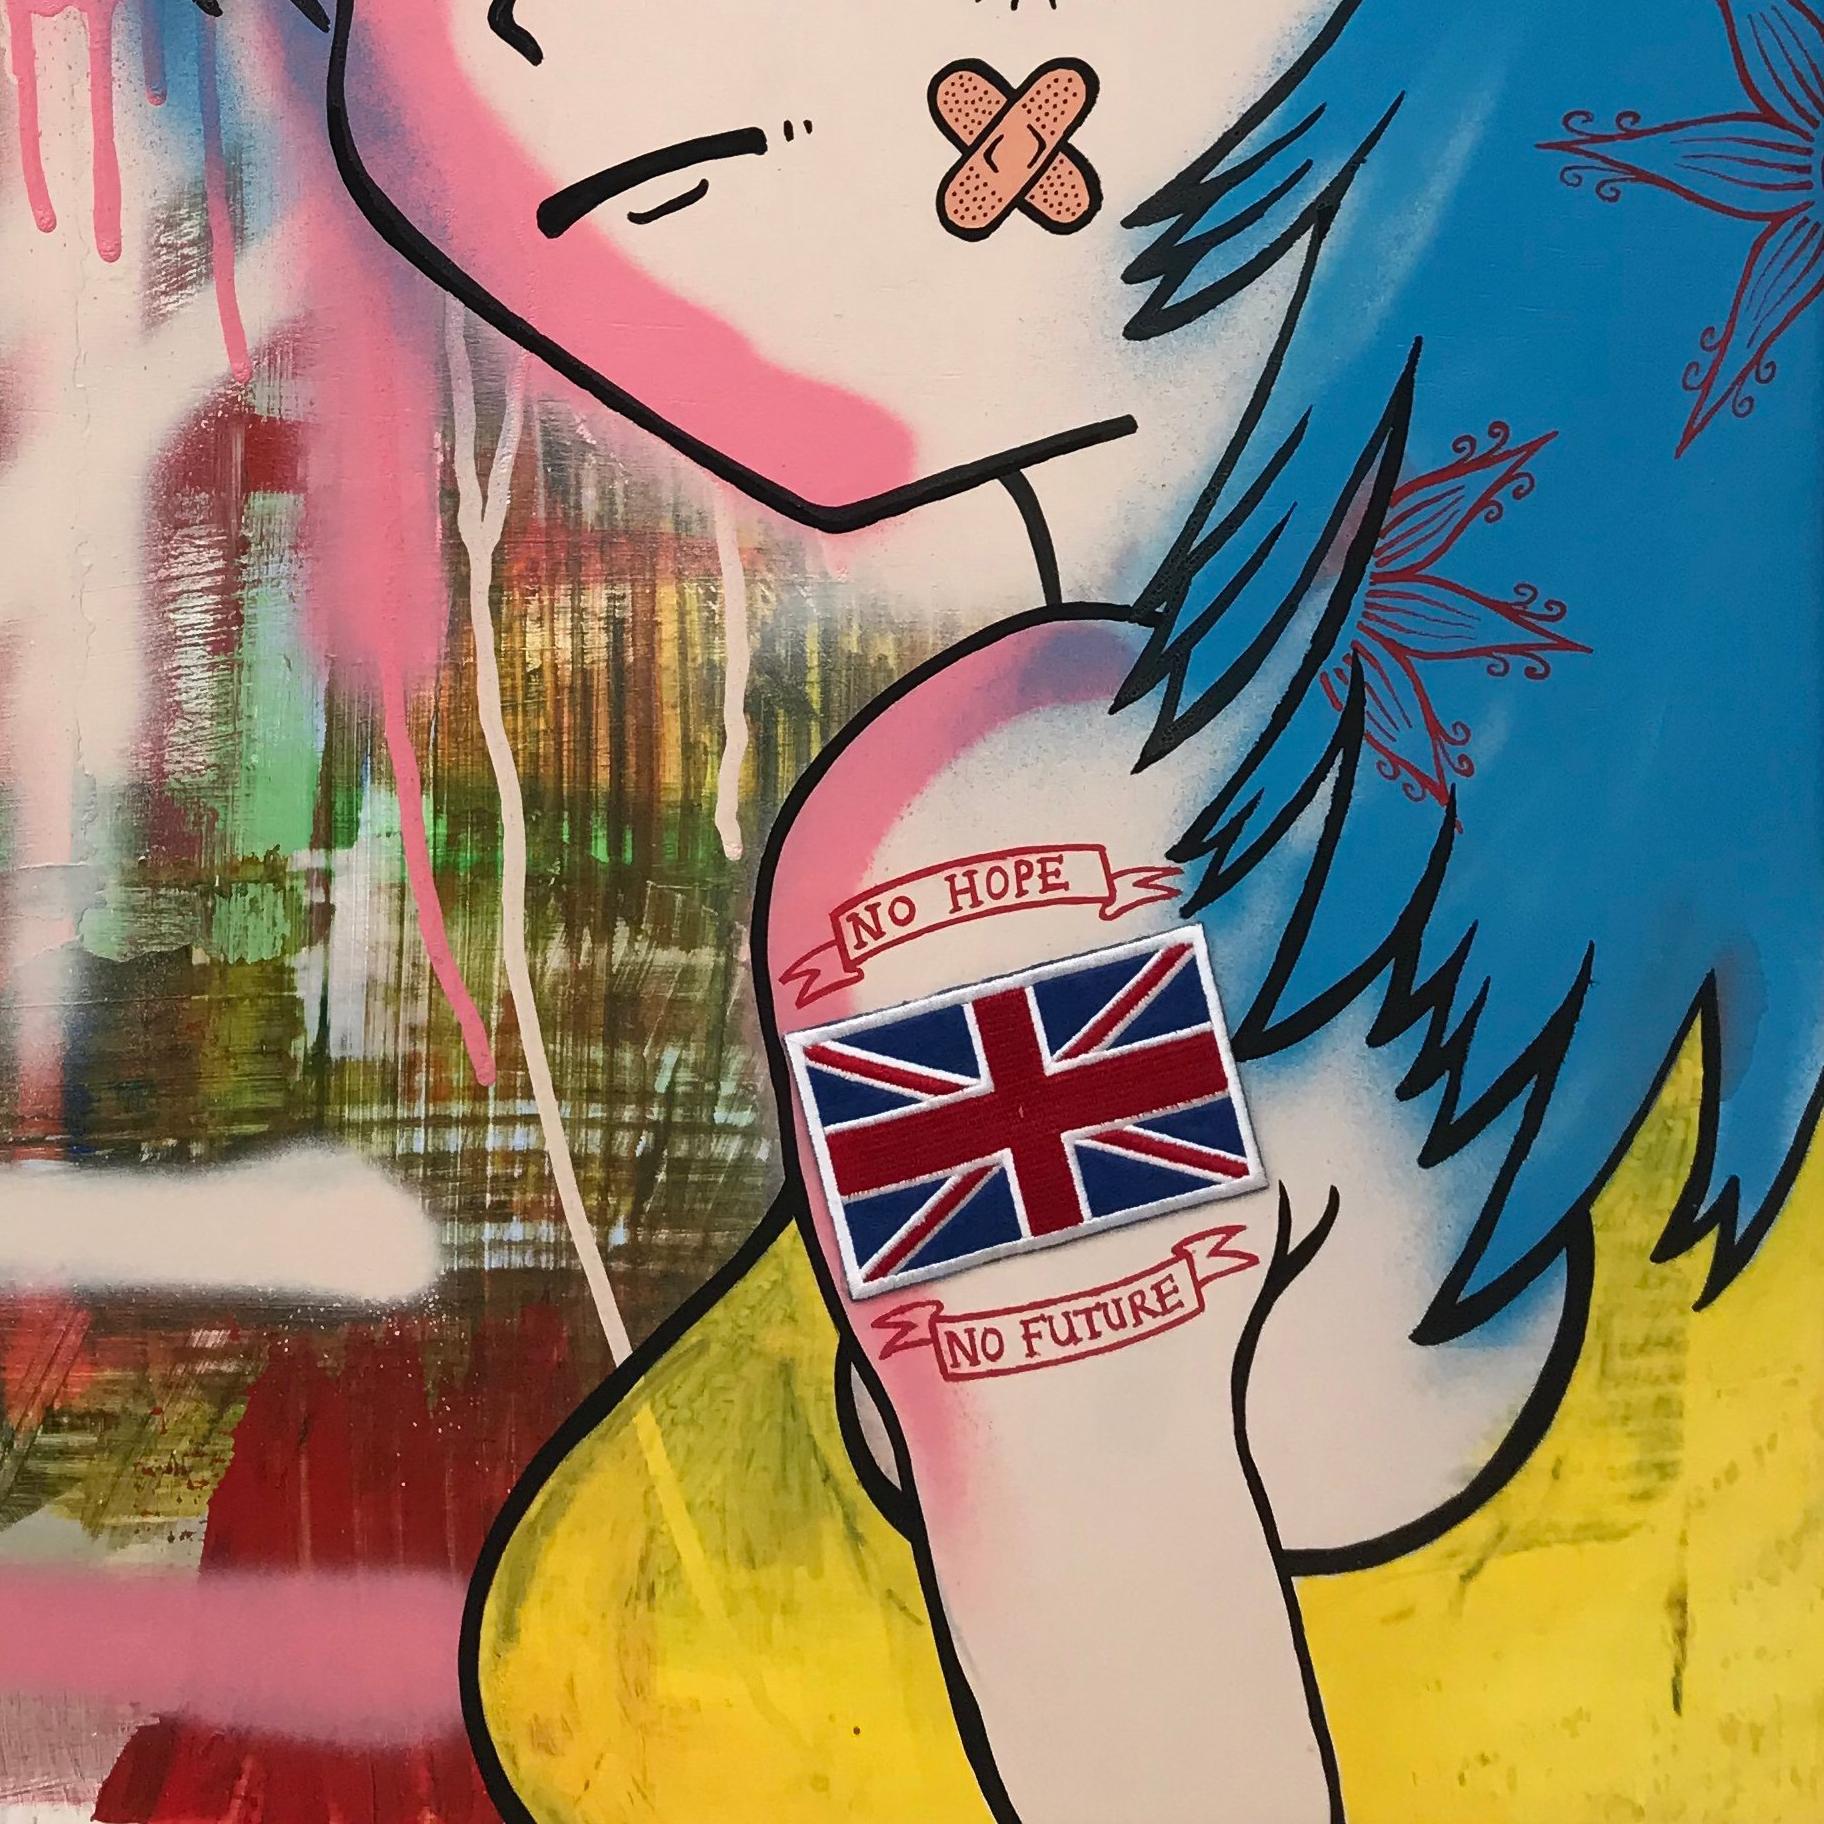 Graffiti Pop Art of Female Figure by Banksy Inspired British Street Urban Artist - Brown Portrait Painting by Chris Pegg